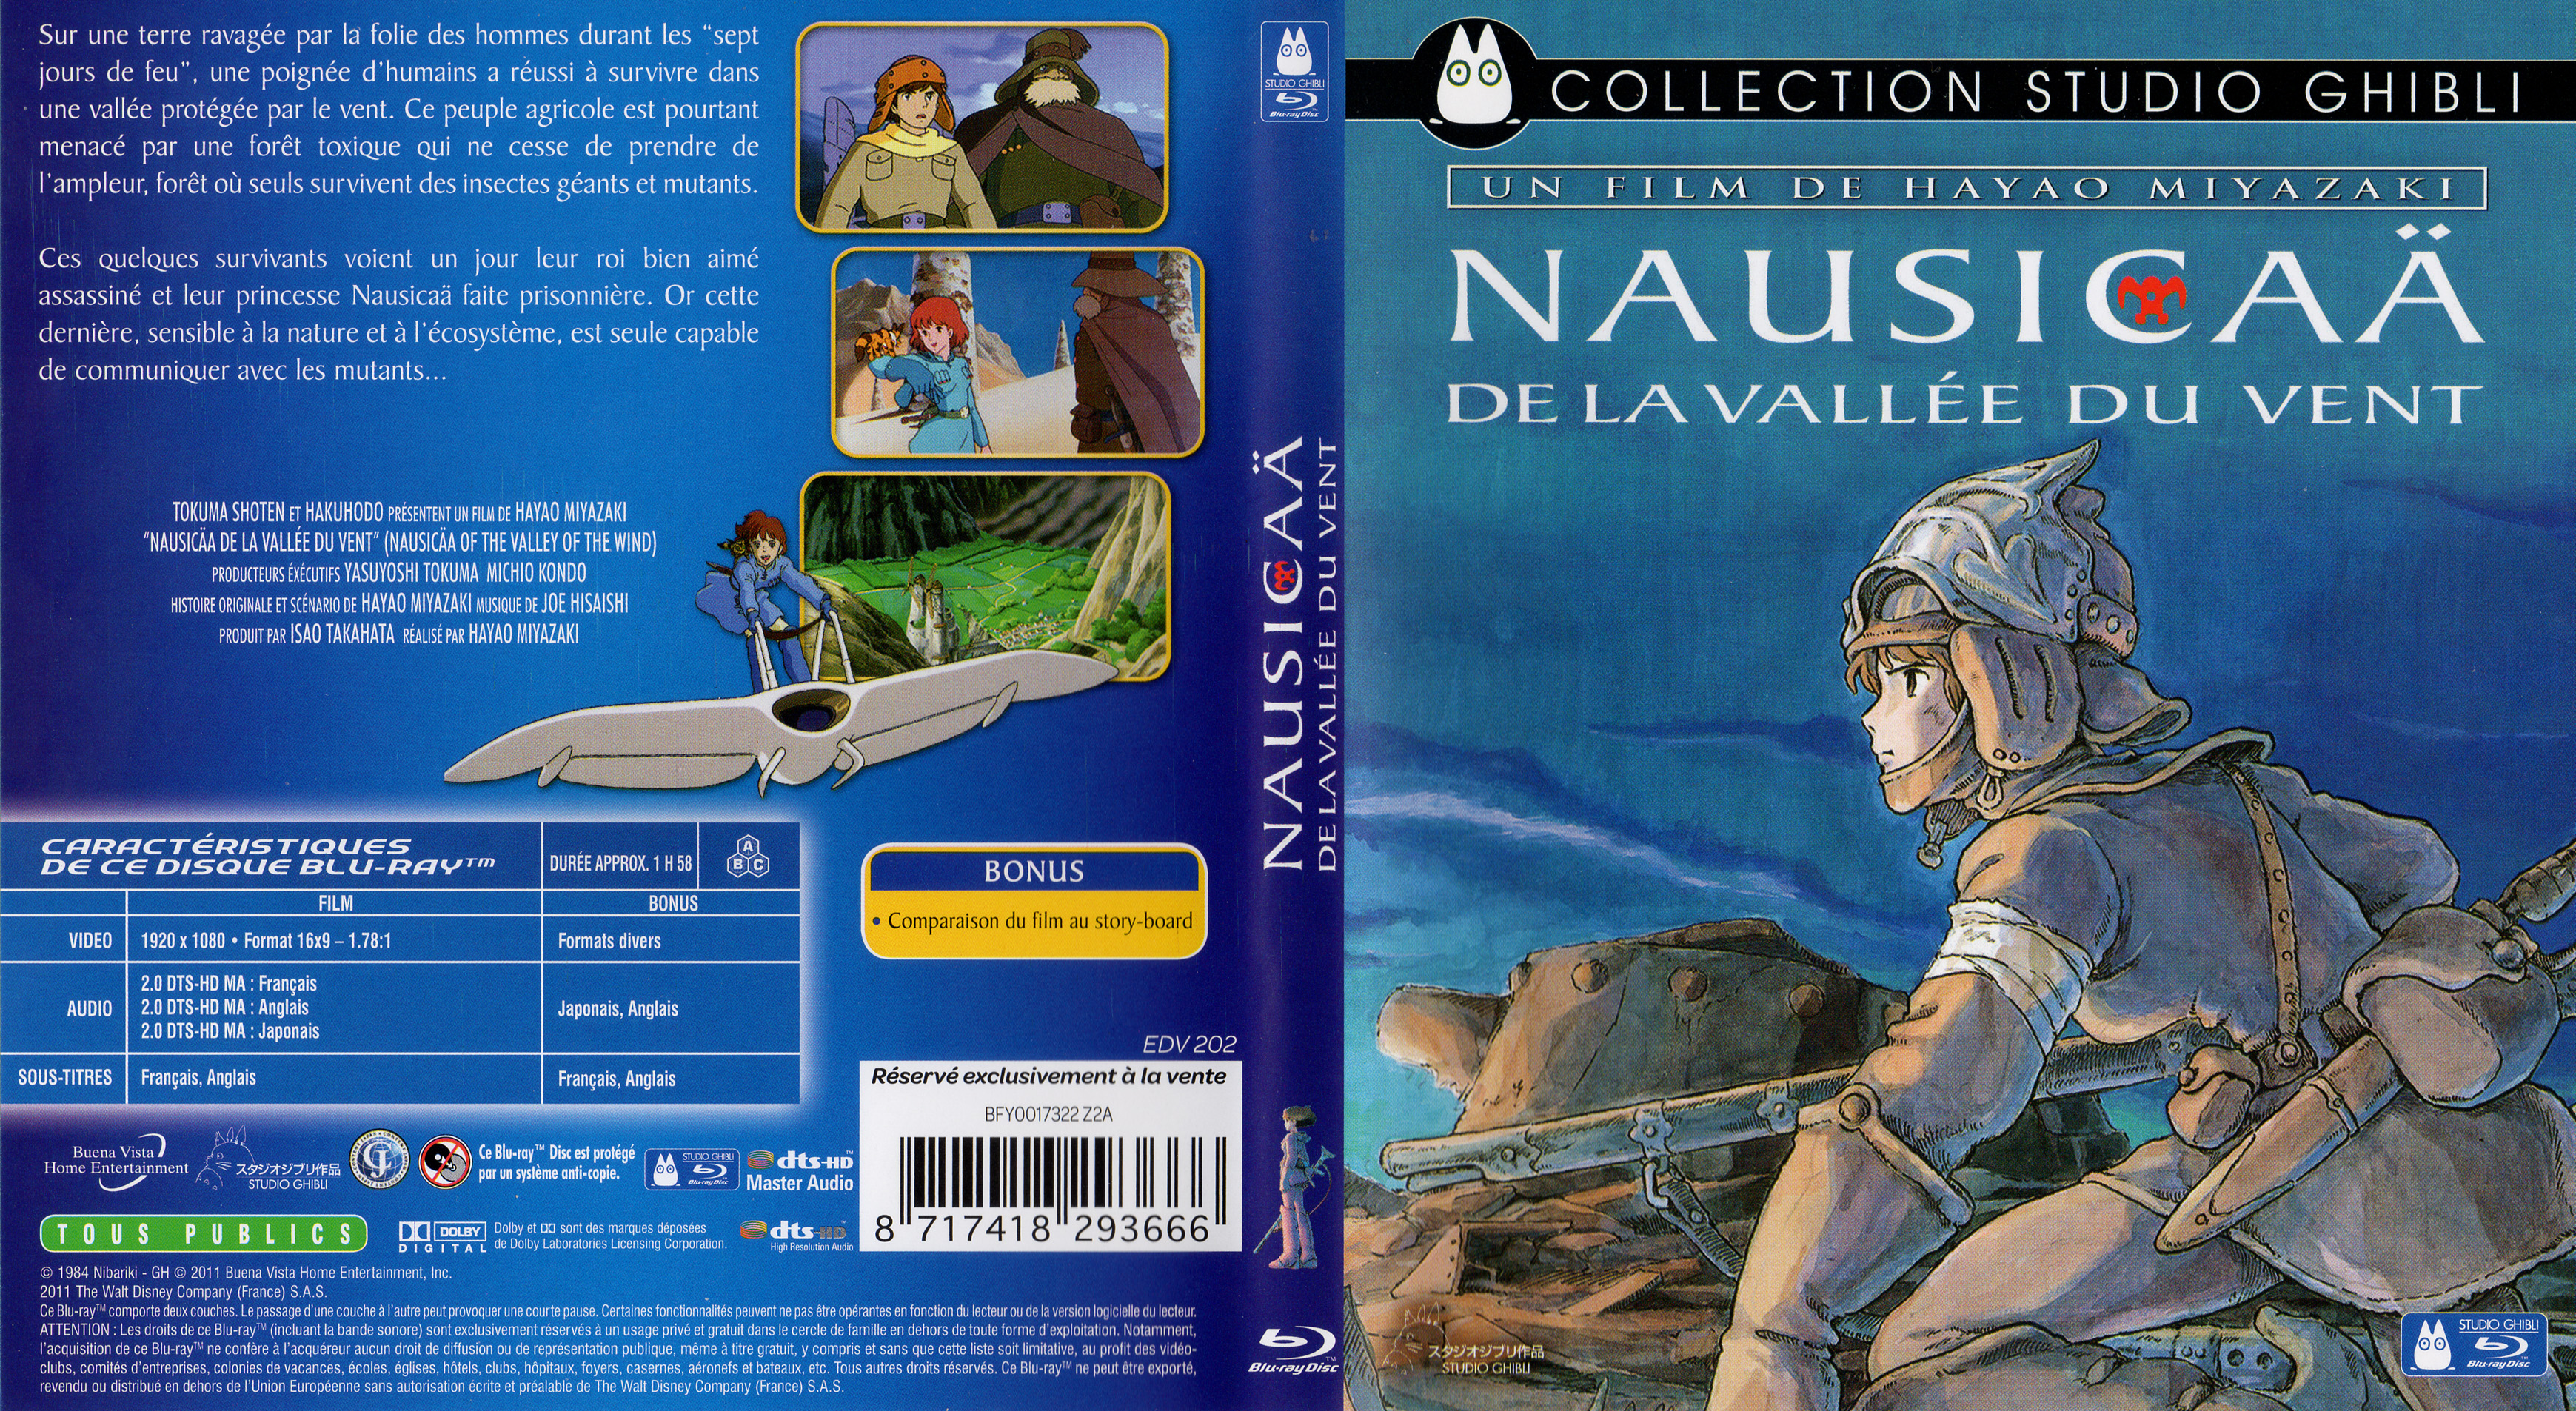 Jaquette DVD Nausicaa de la vallee du vent (BLU-RAY)